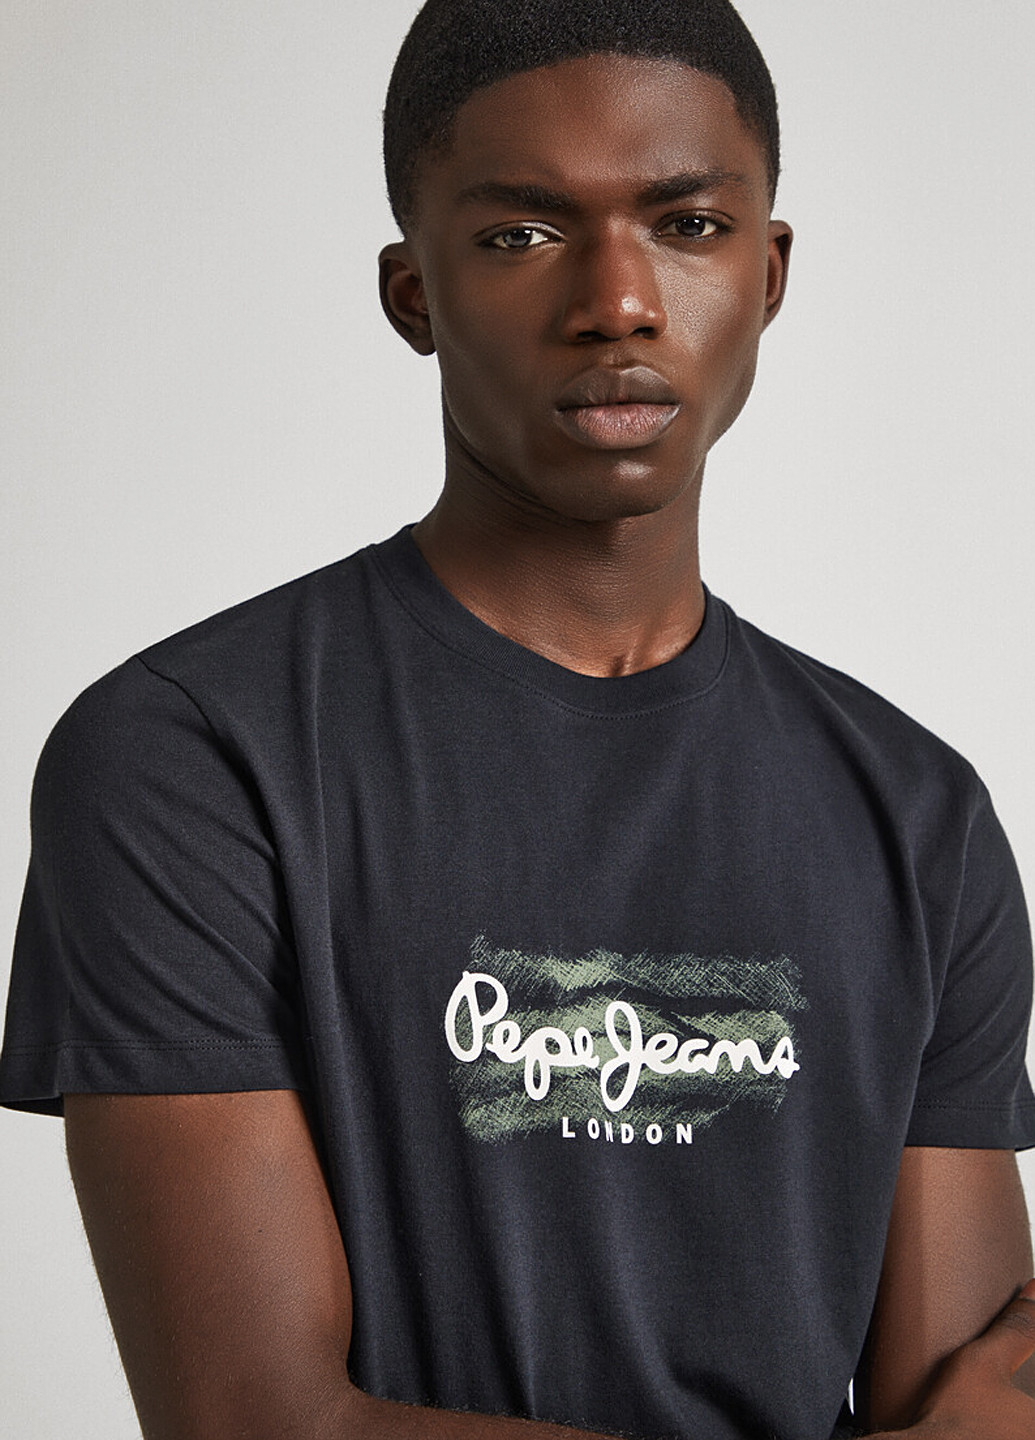 Темно-серая футболка Pepe Jeans London